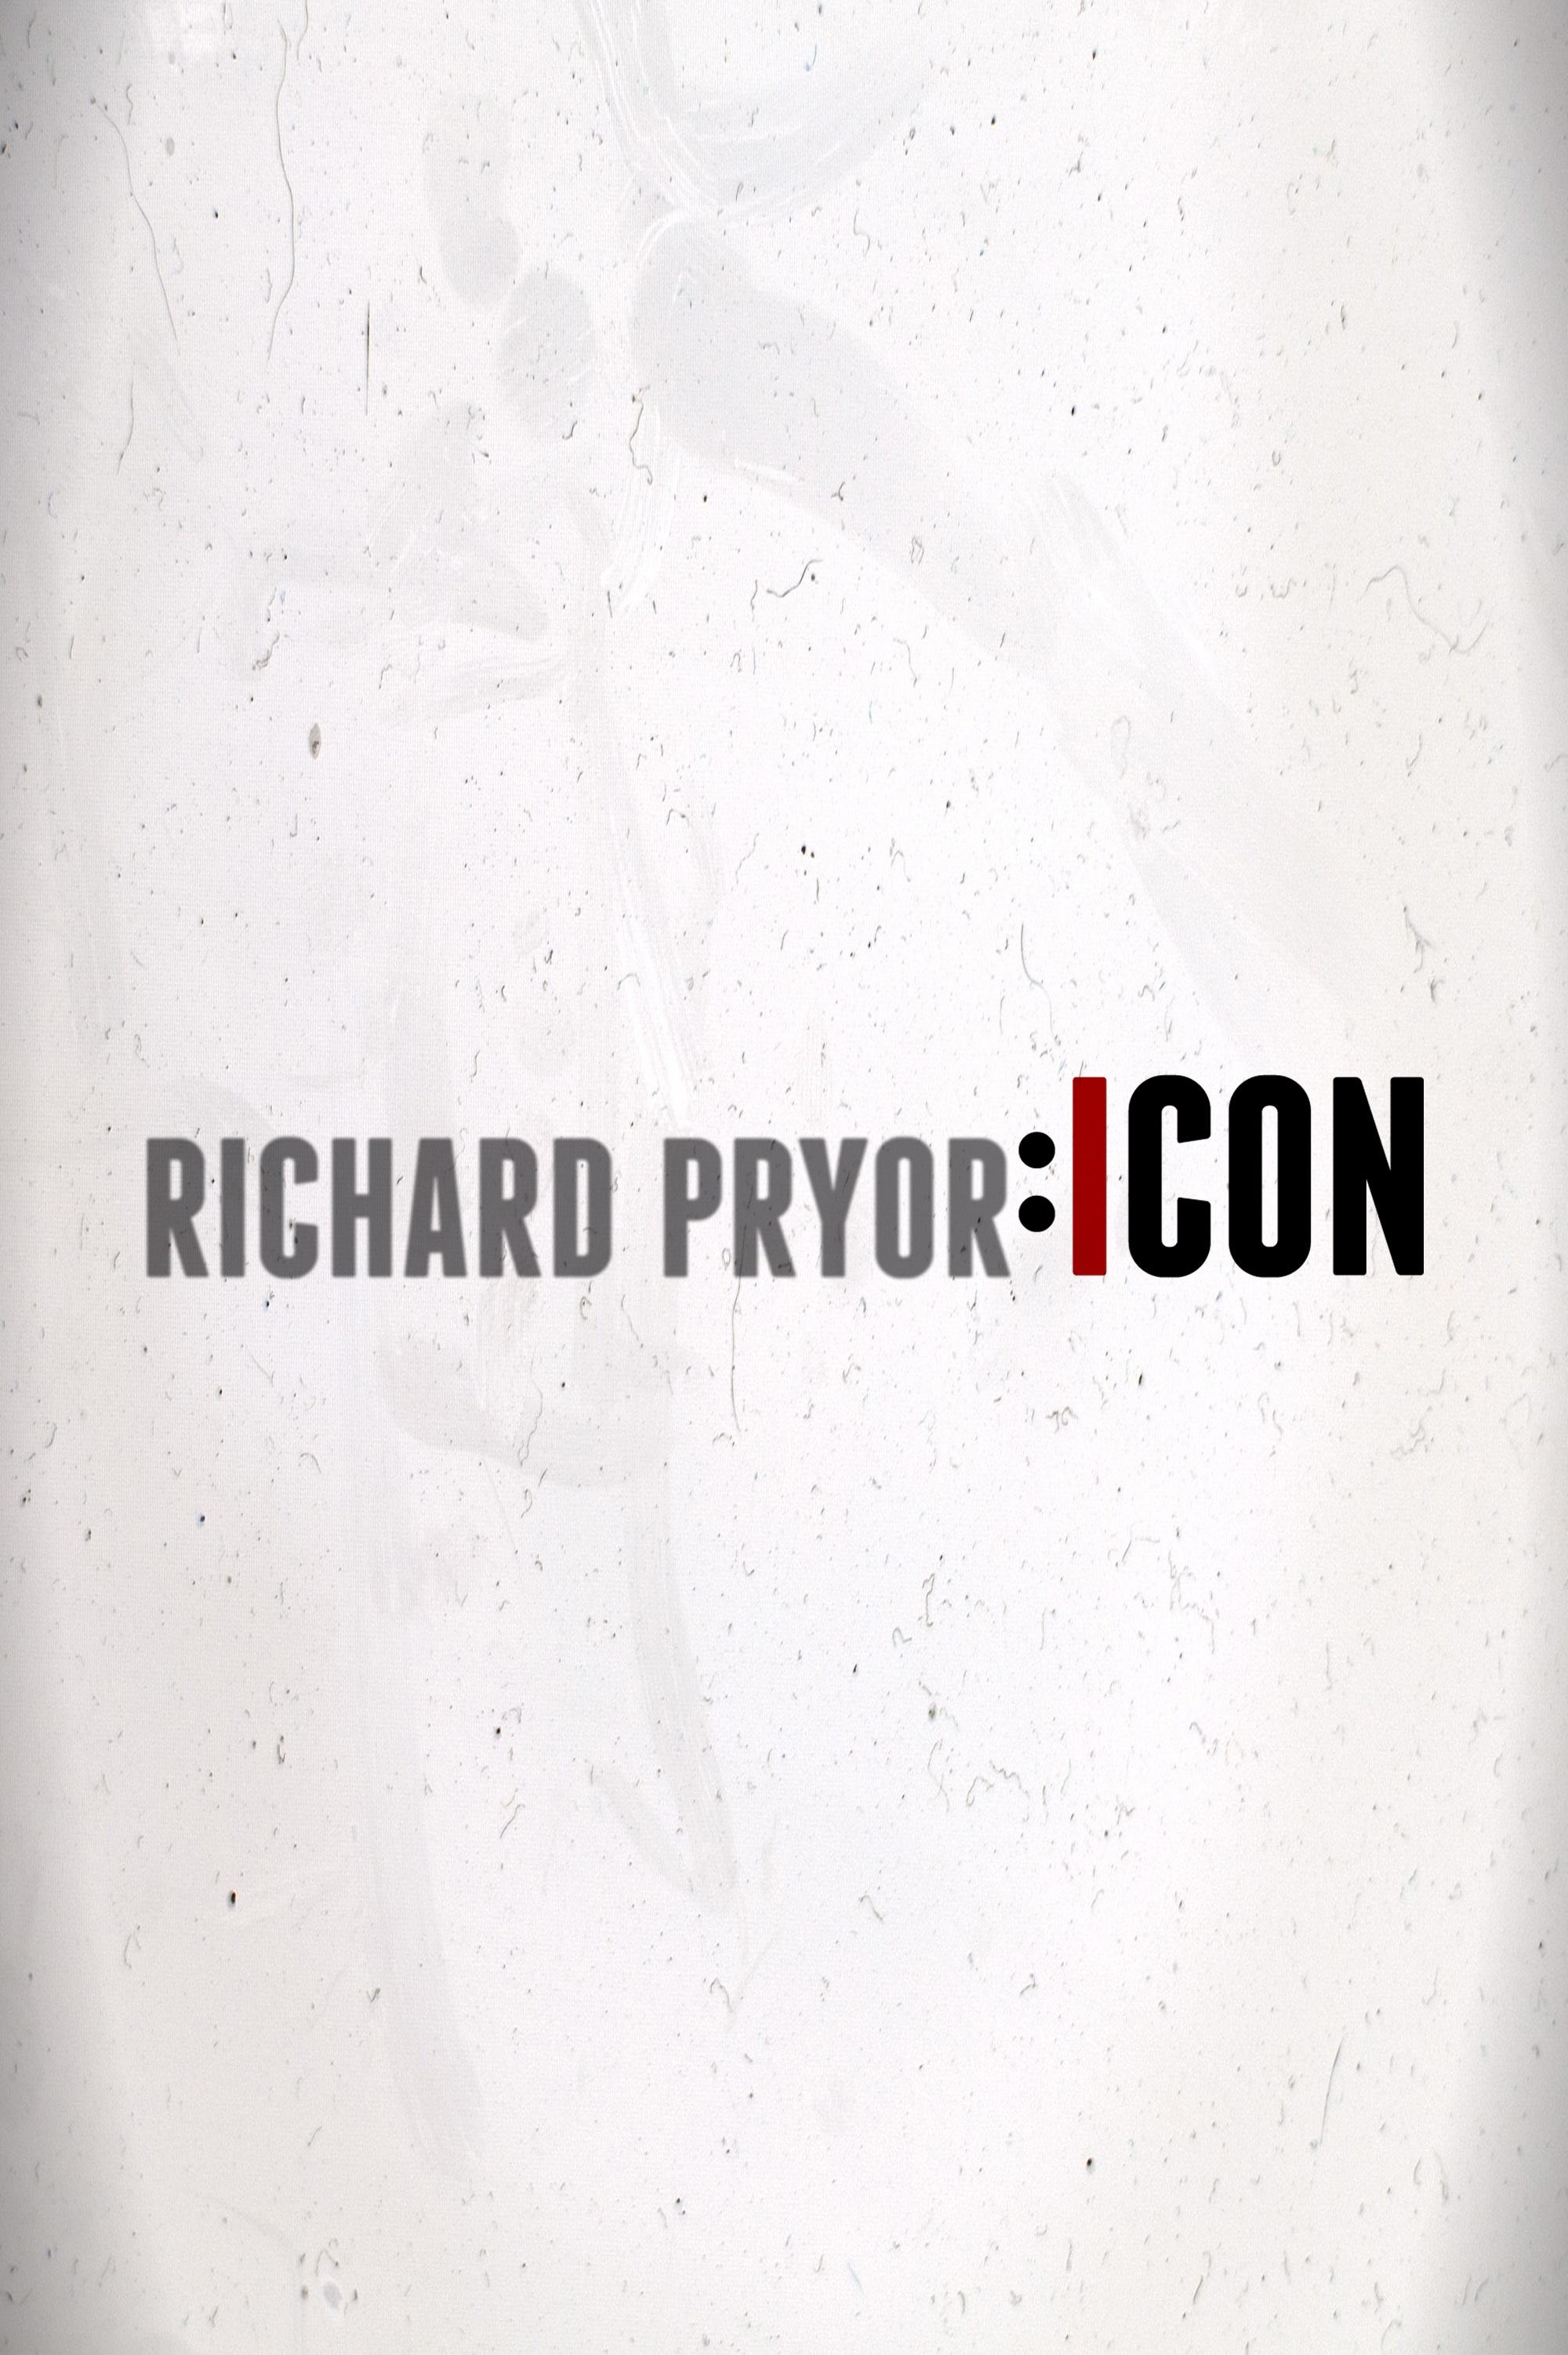 Richard Pryor: Icon show's poster